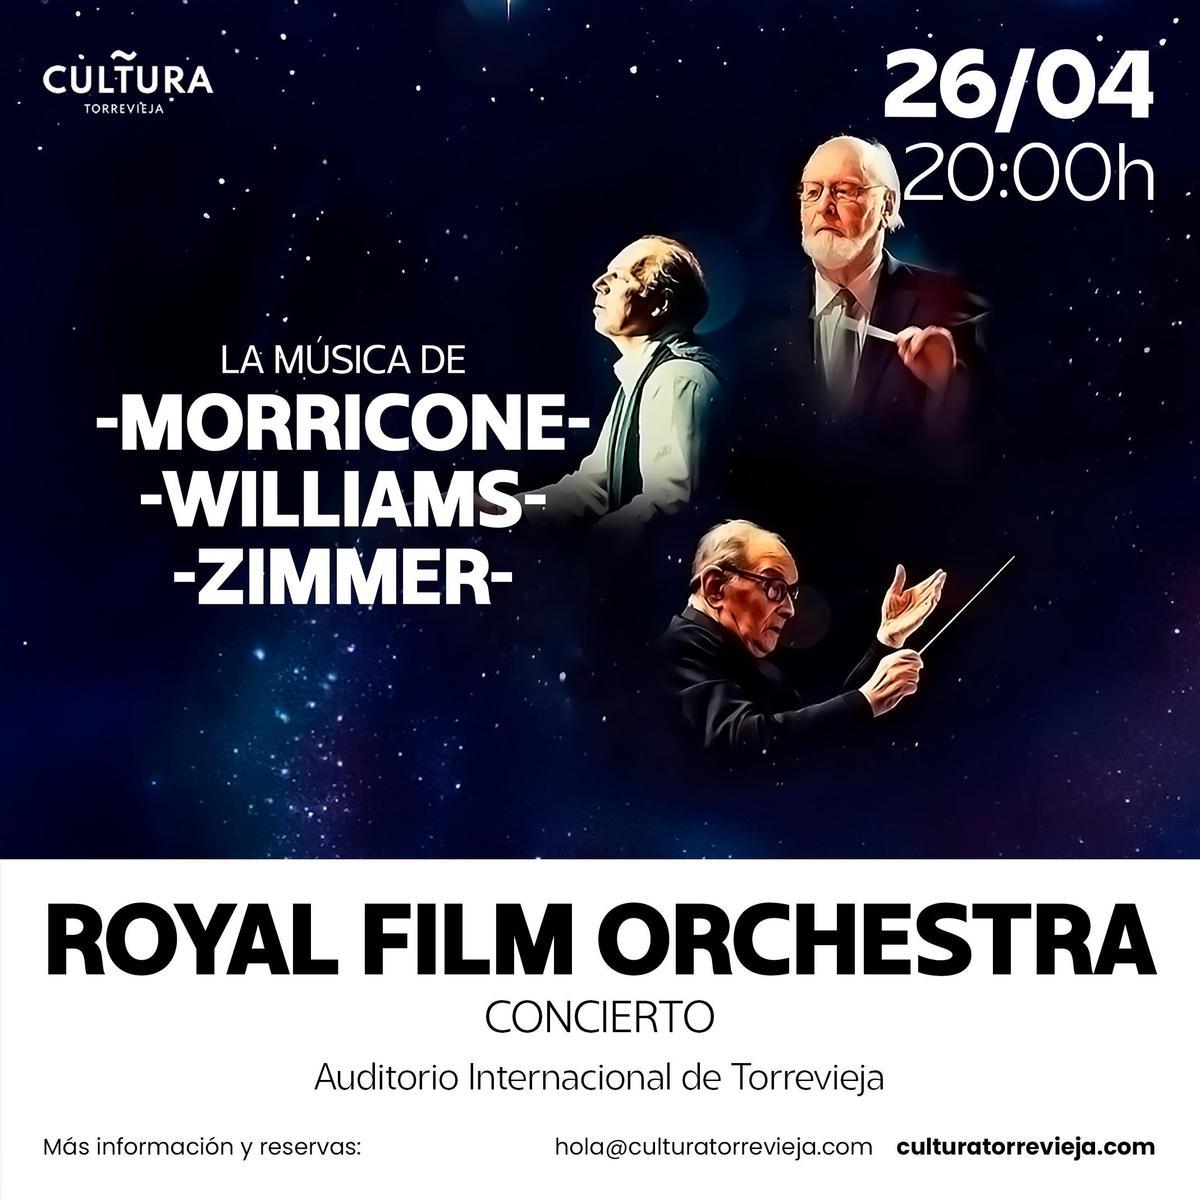 Royal Film Orchestra